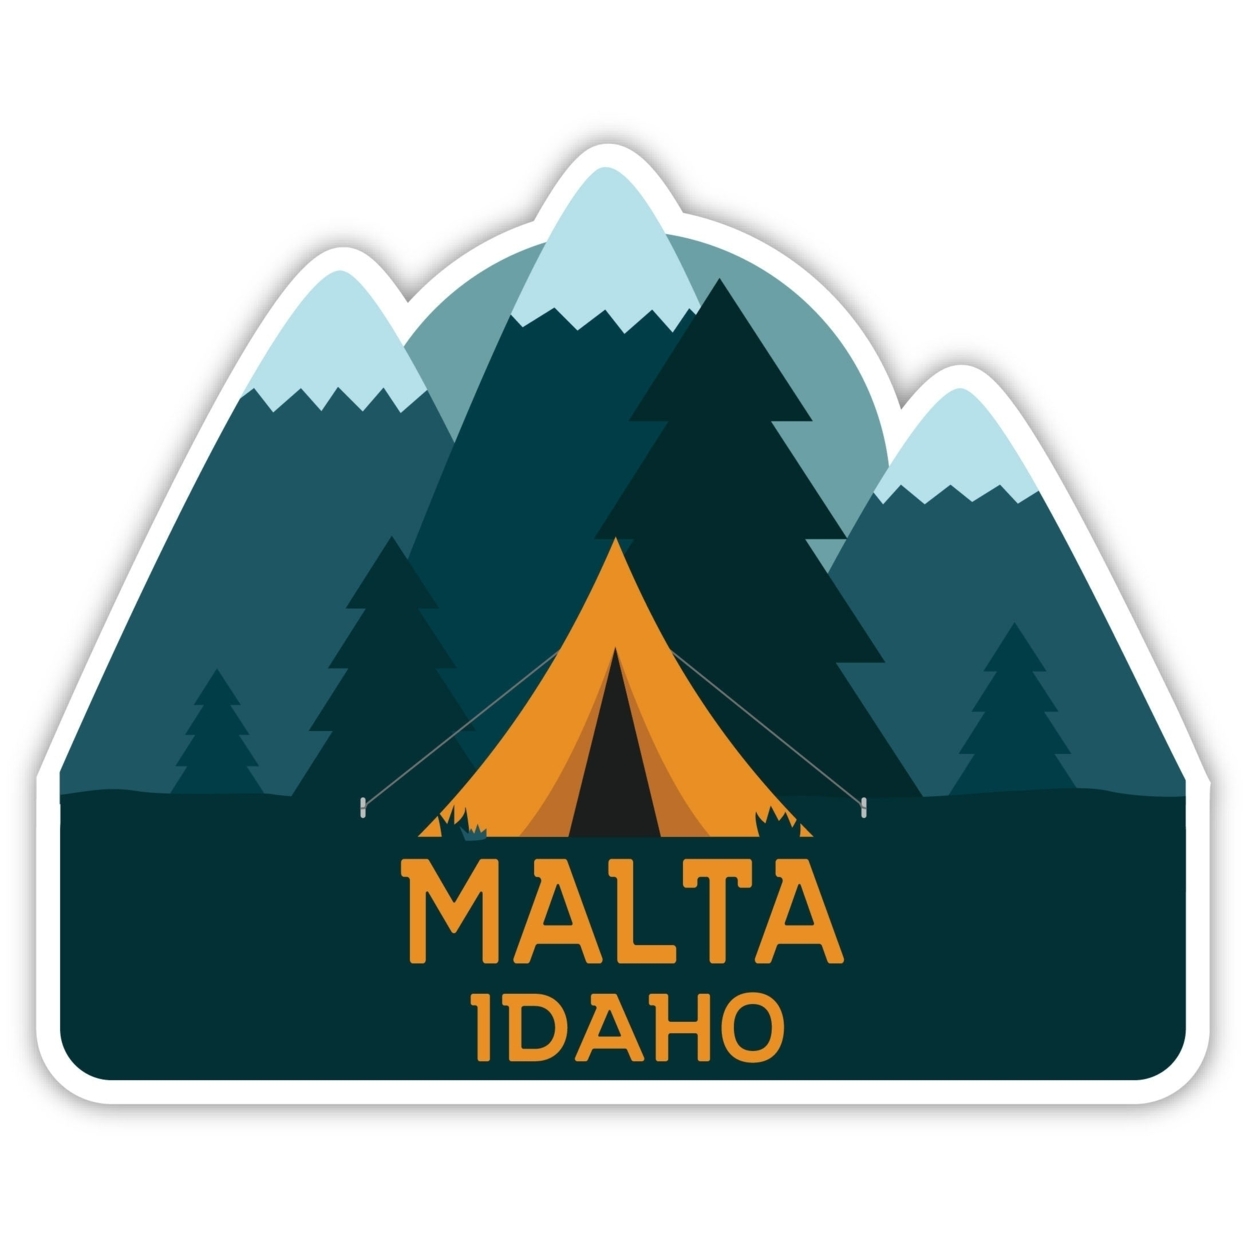 Malta Idaho Souvenir Decorative Stickers (Choose Theme And Size) - 4-Inch, Tent